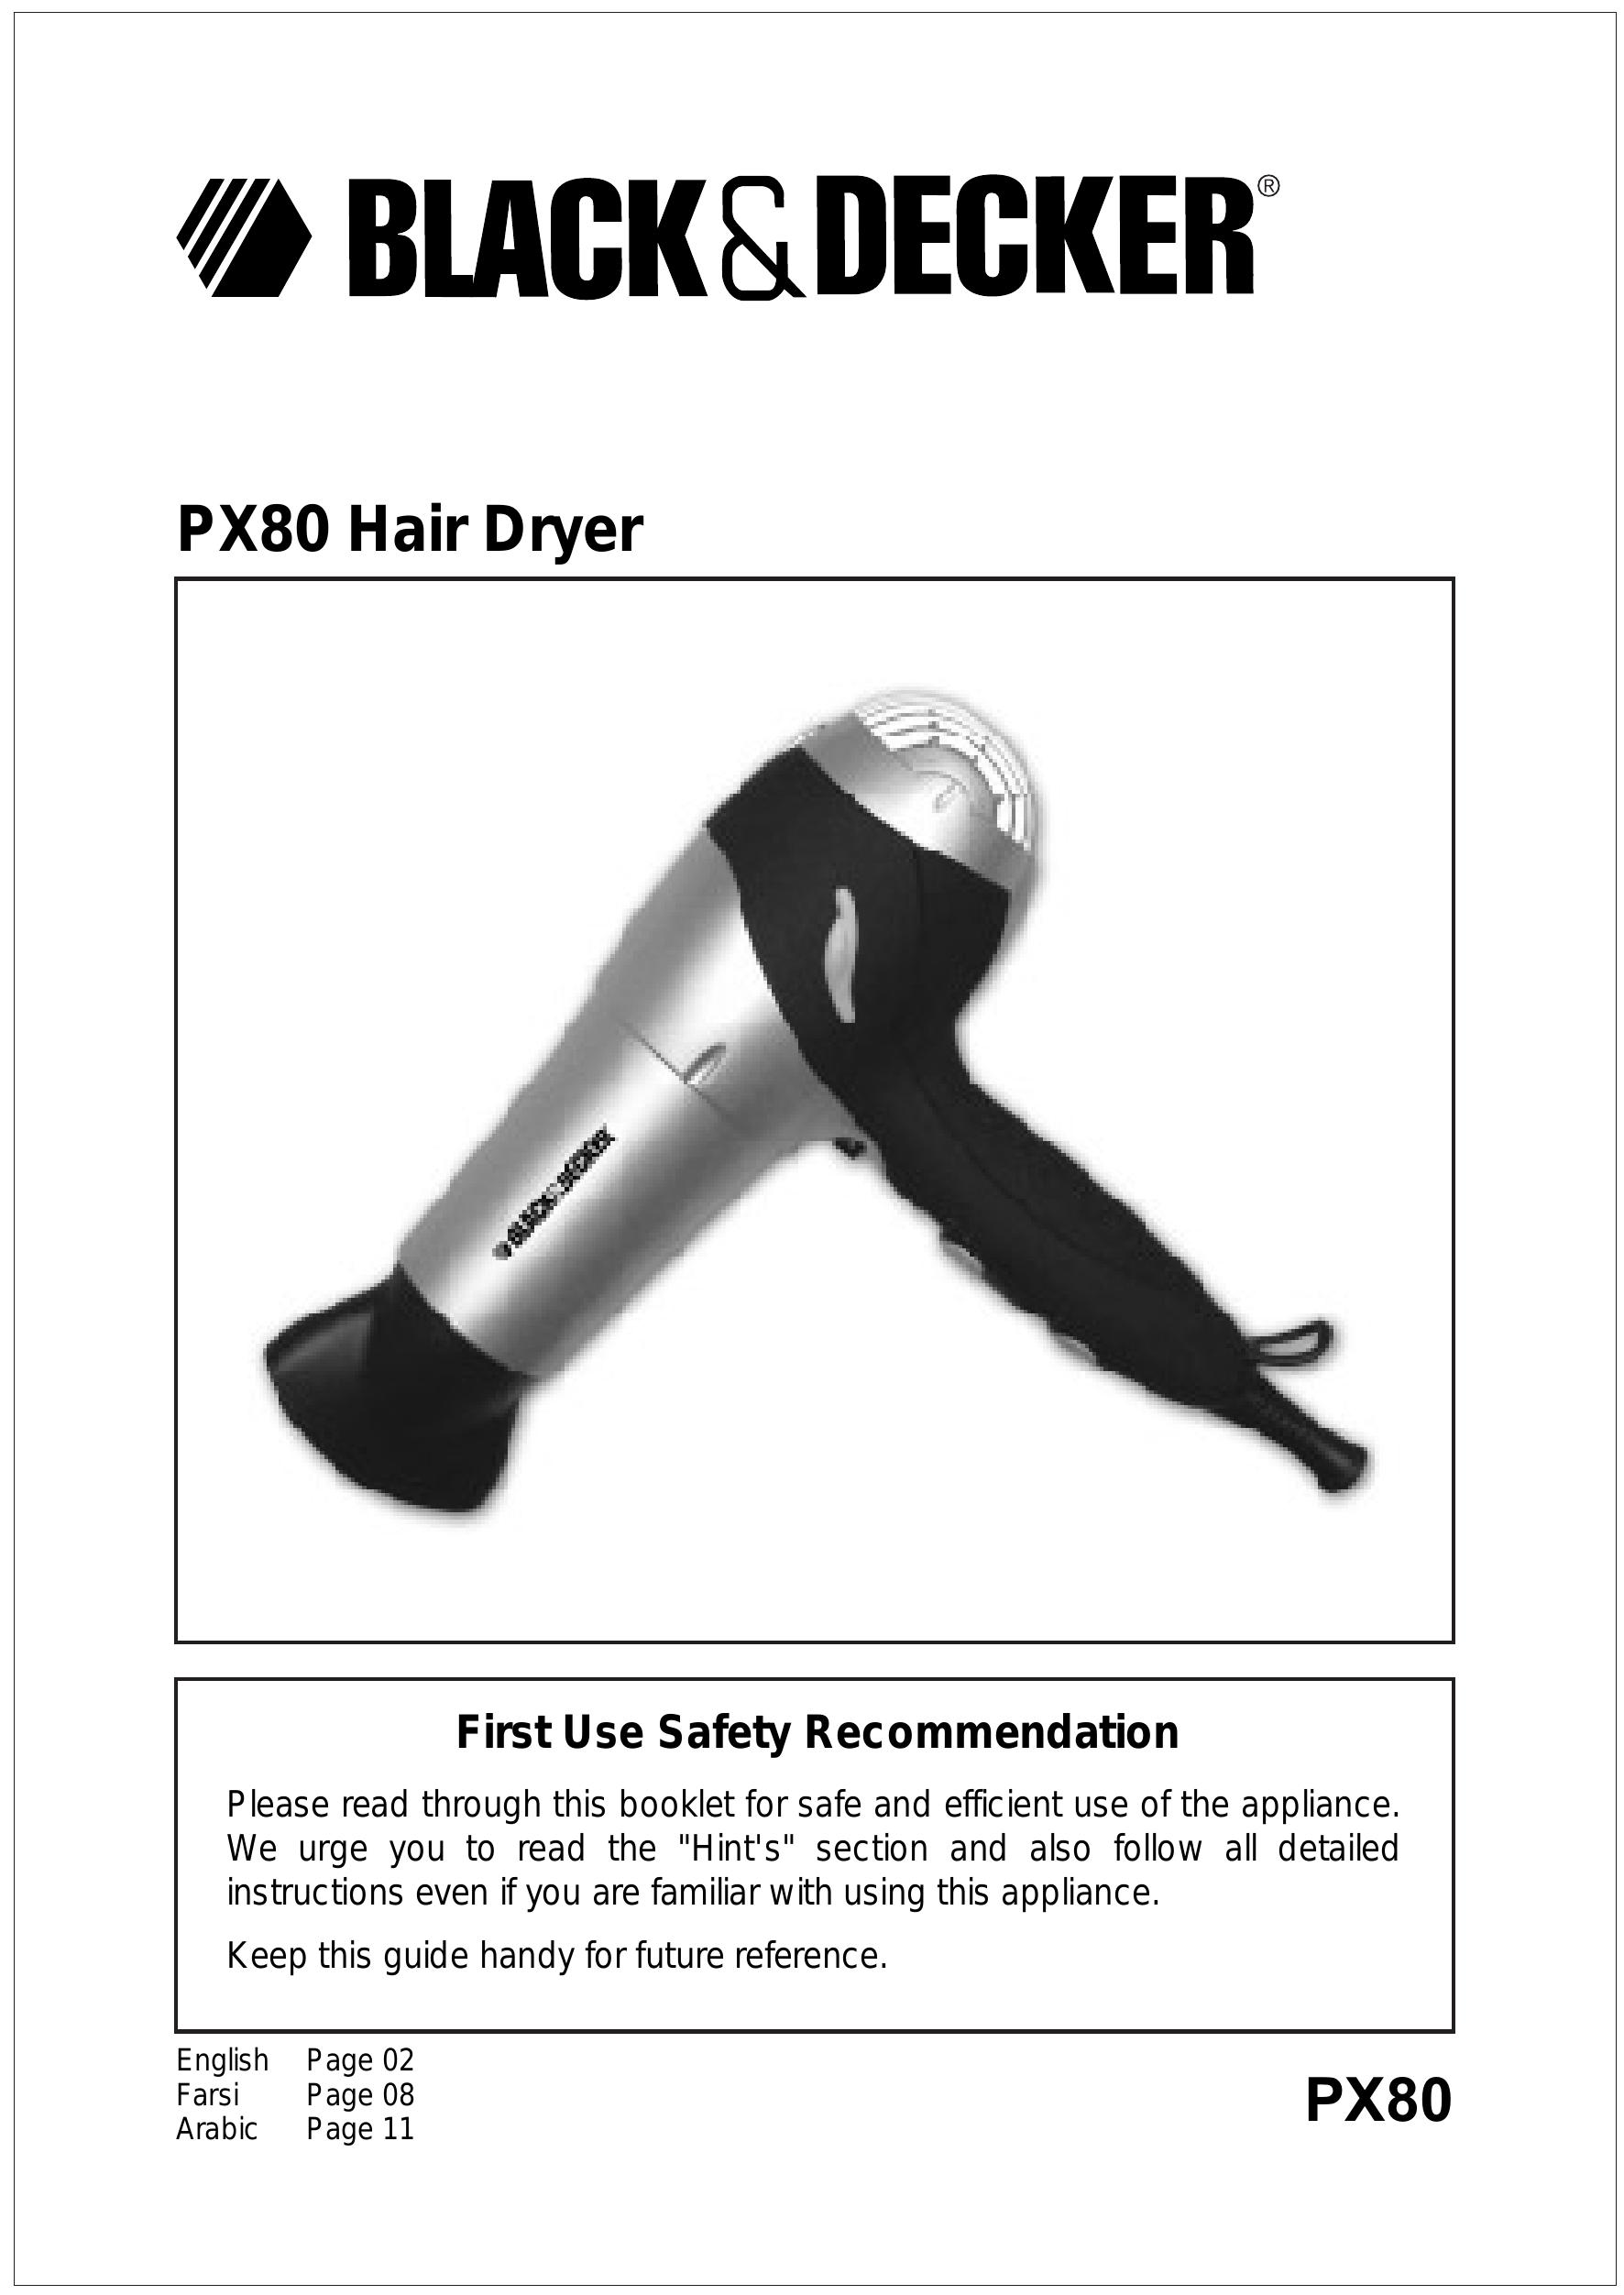 Black & Decker PX80 Hair Dryer User Manual